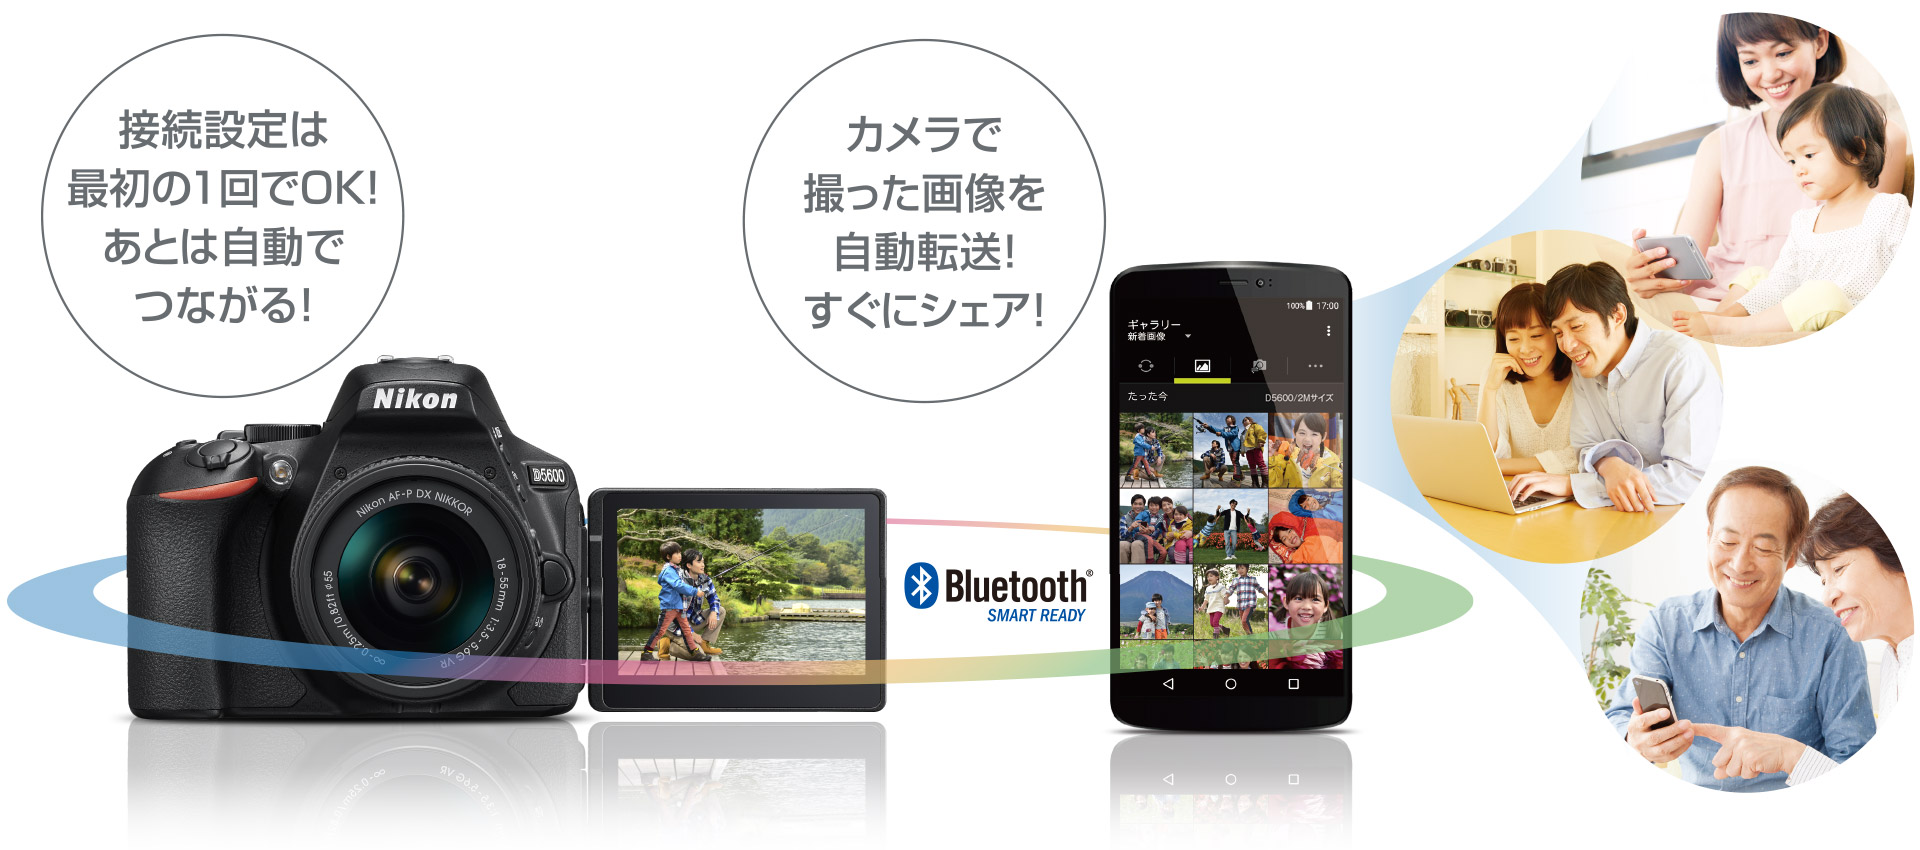 Nikon デジタル一眼レフカメラ D5600 ダブルズームキット ブラック D5600WZBK - 3